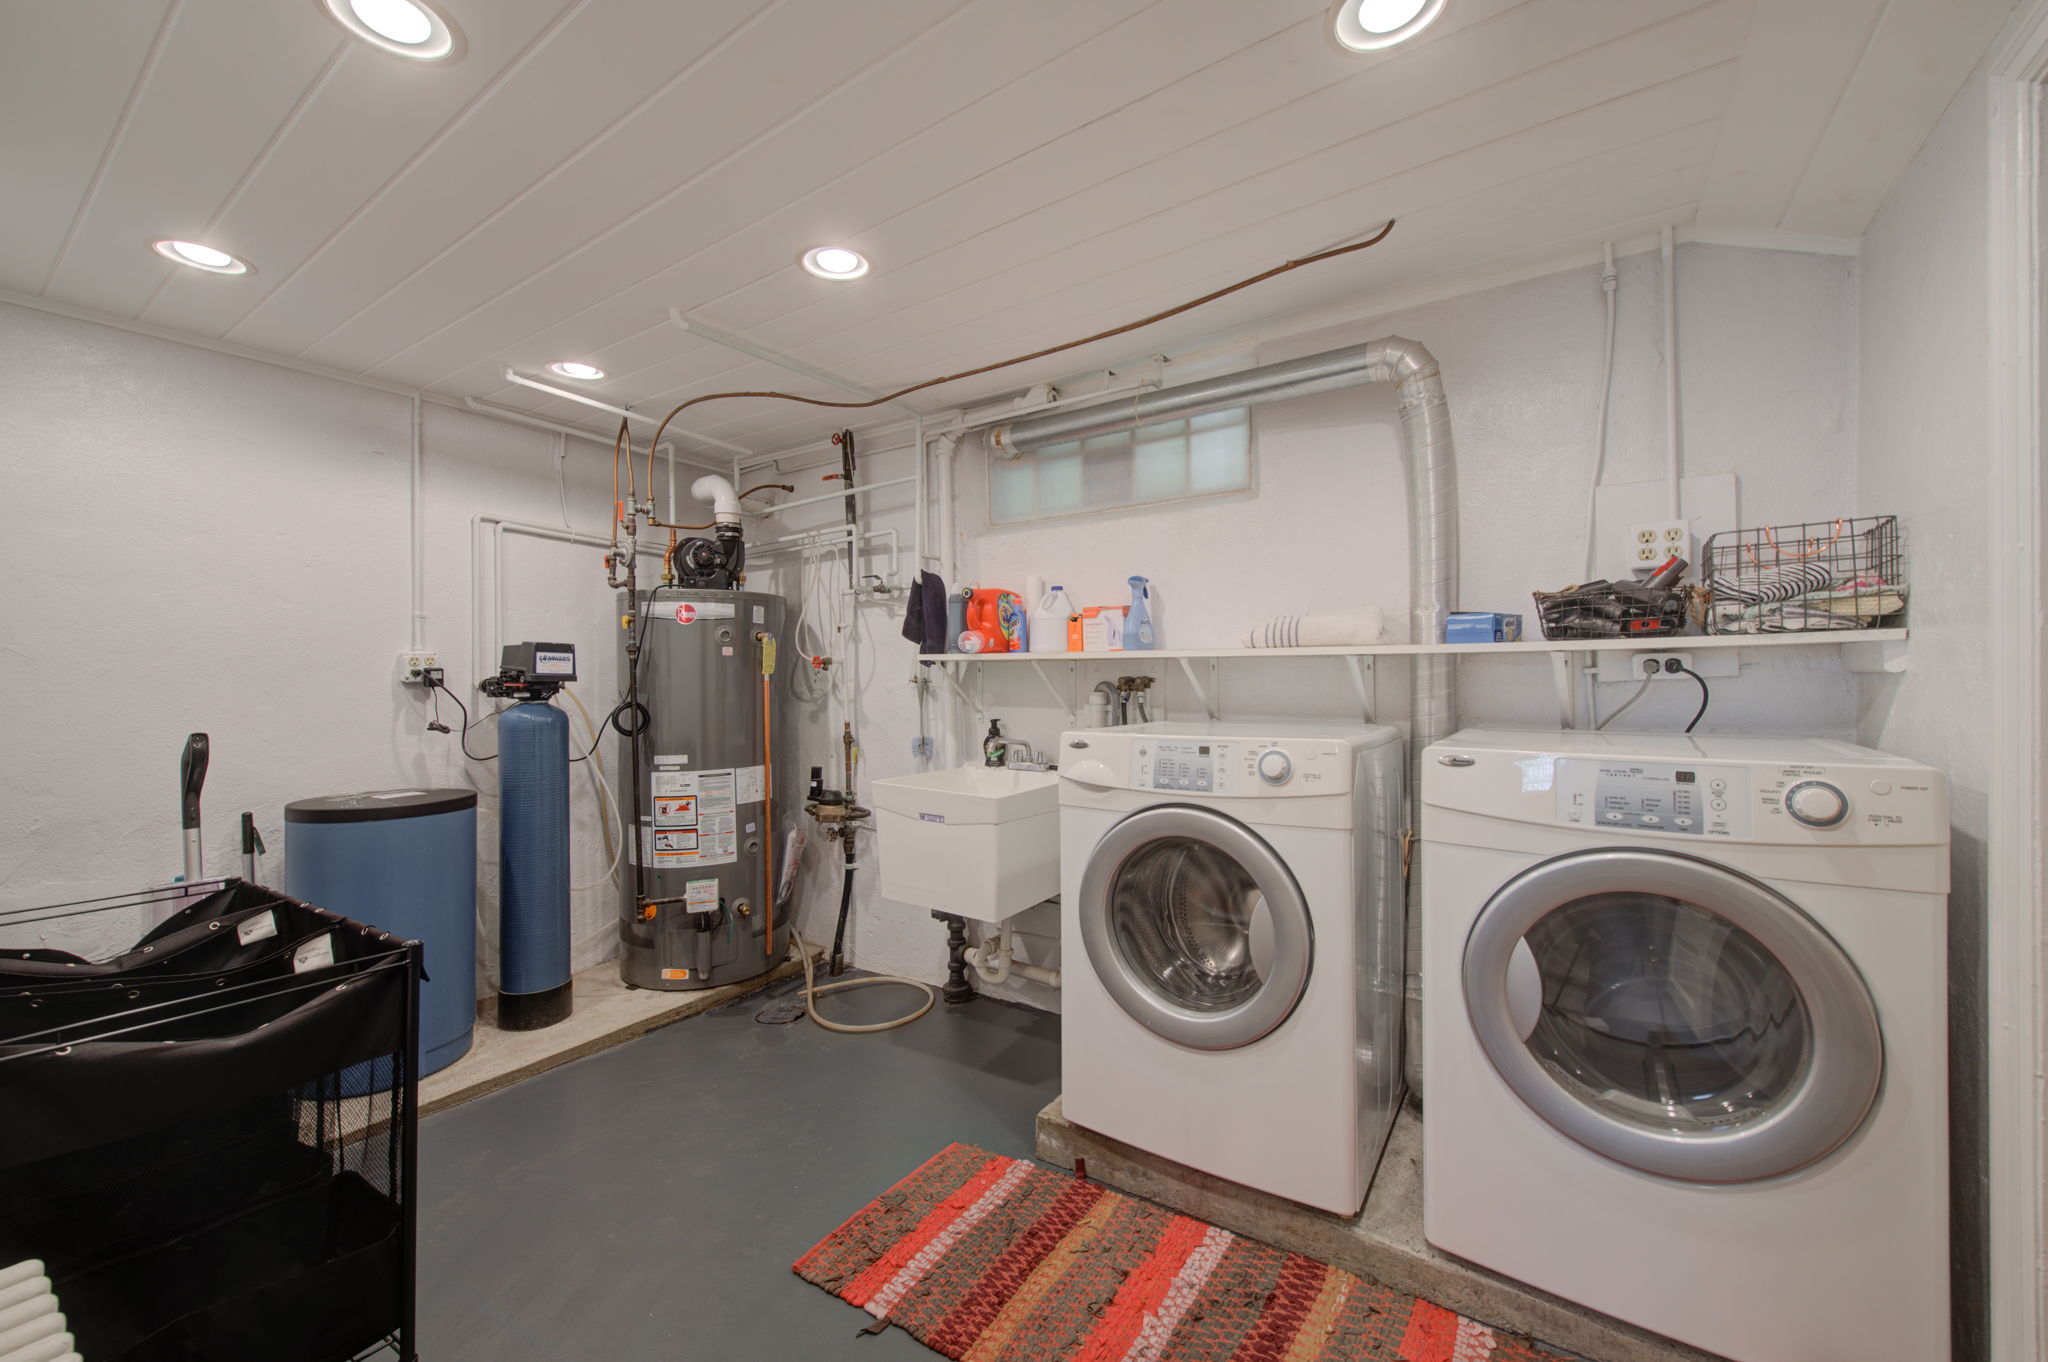 42 Lower Level Laundry/Utility Room